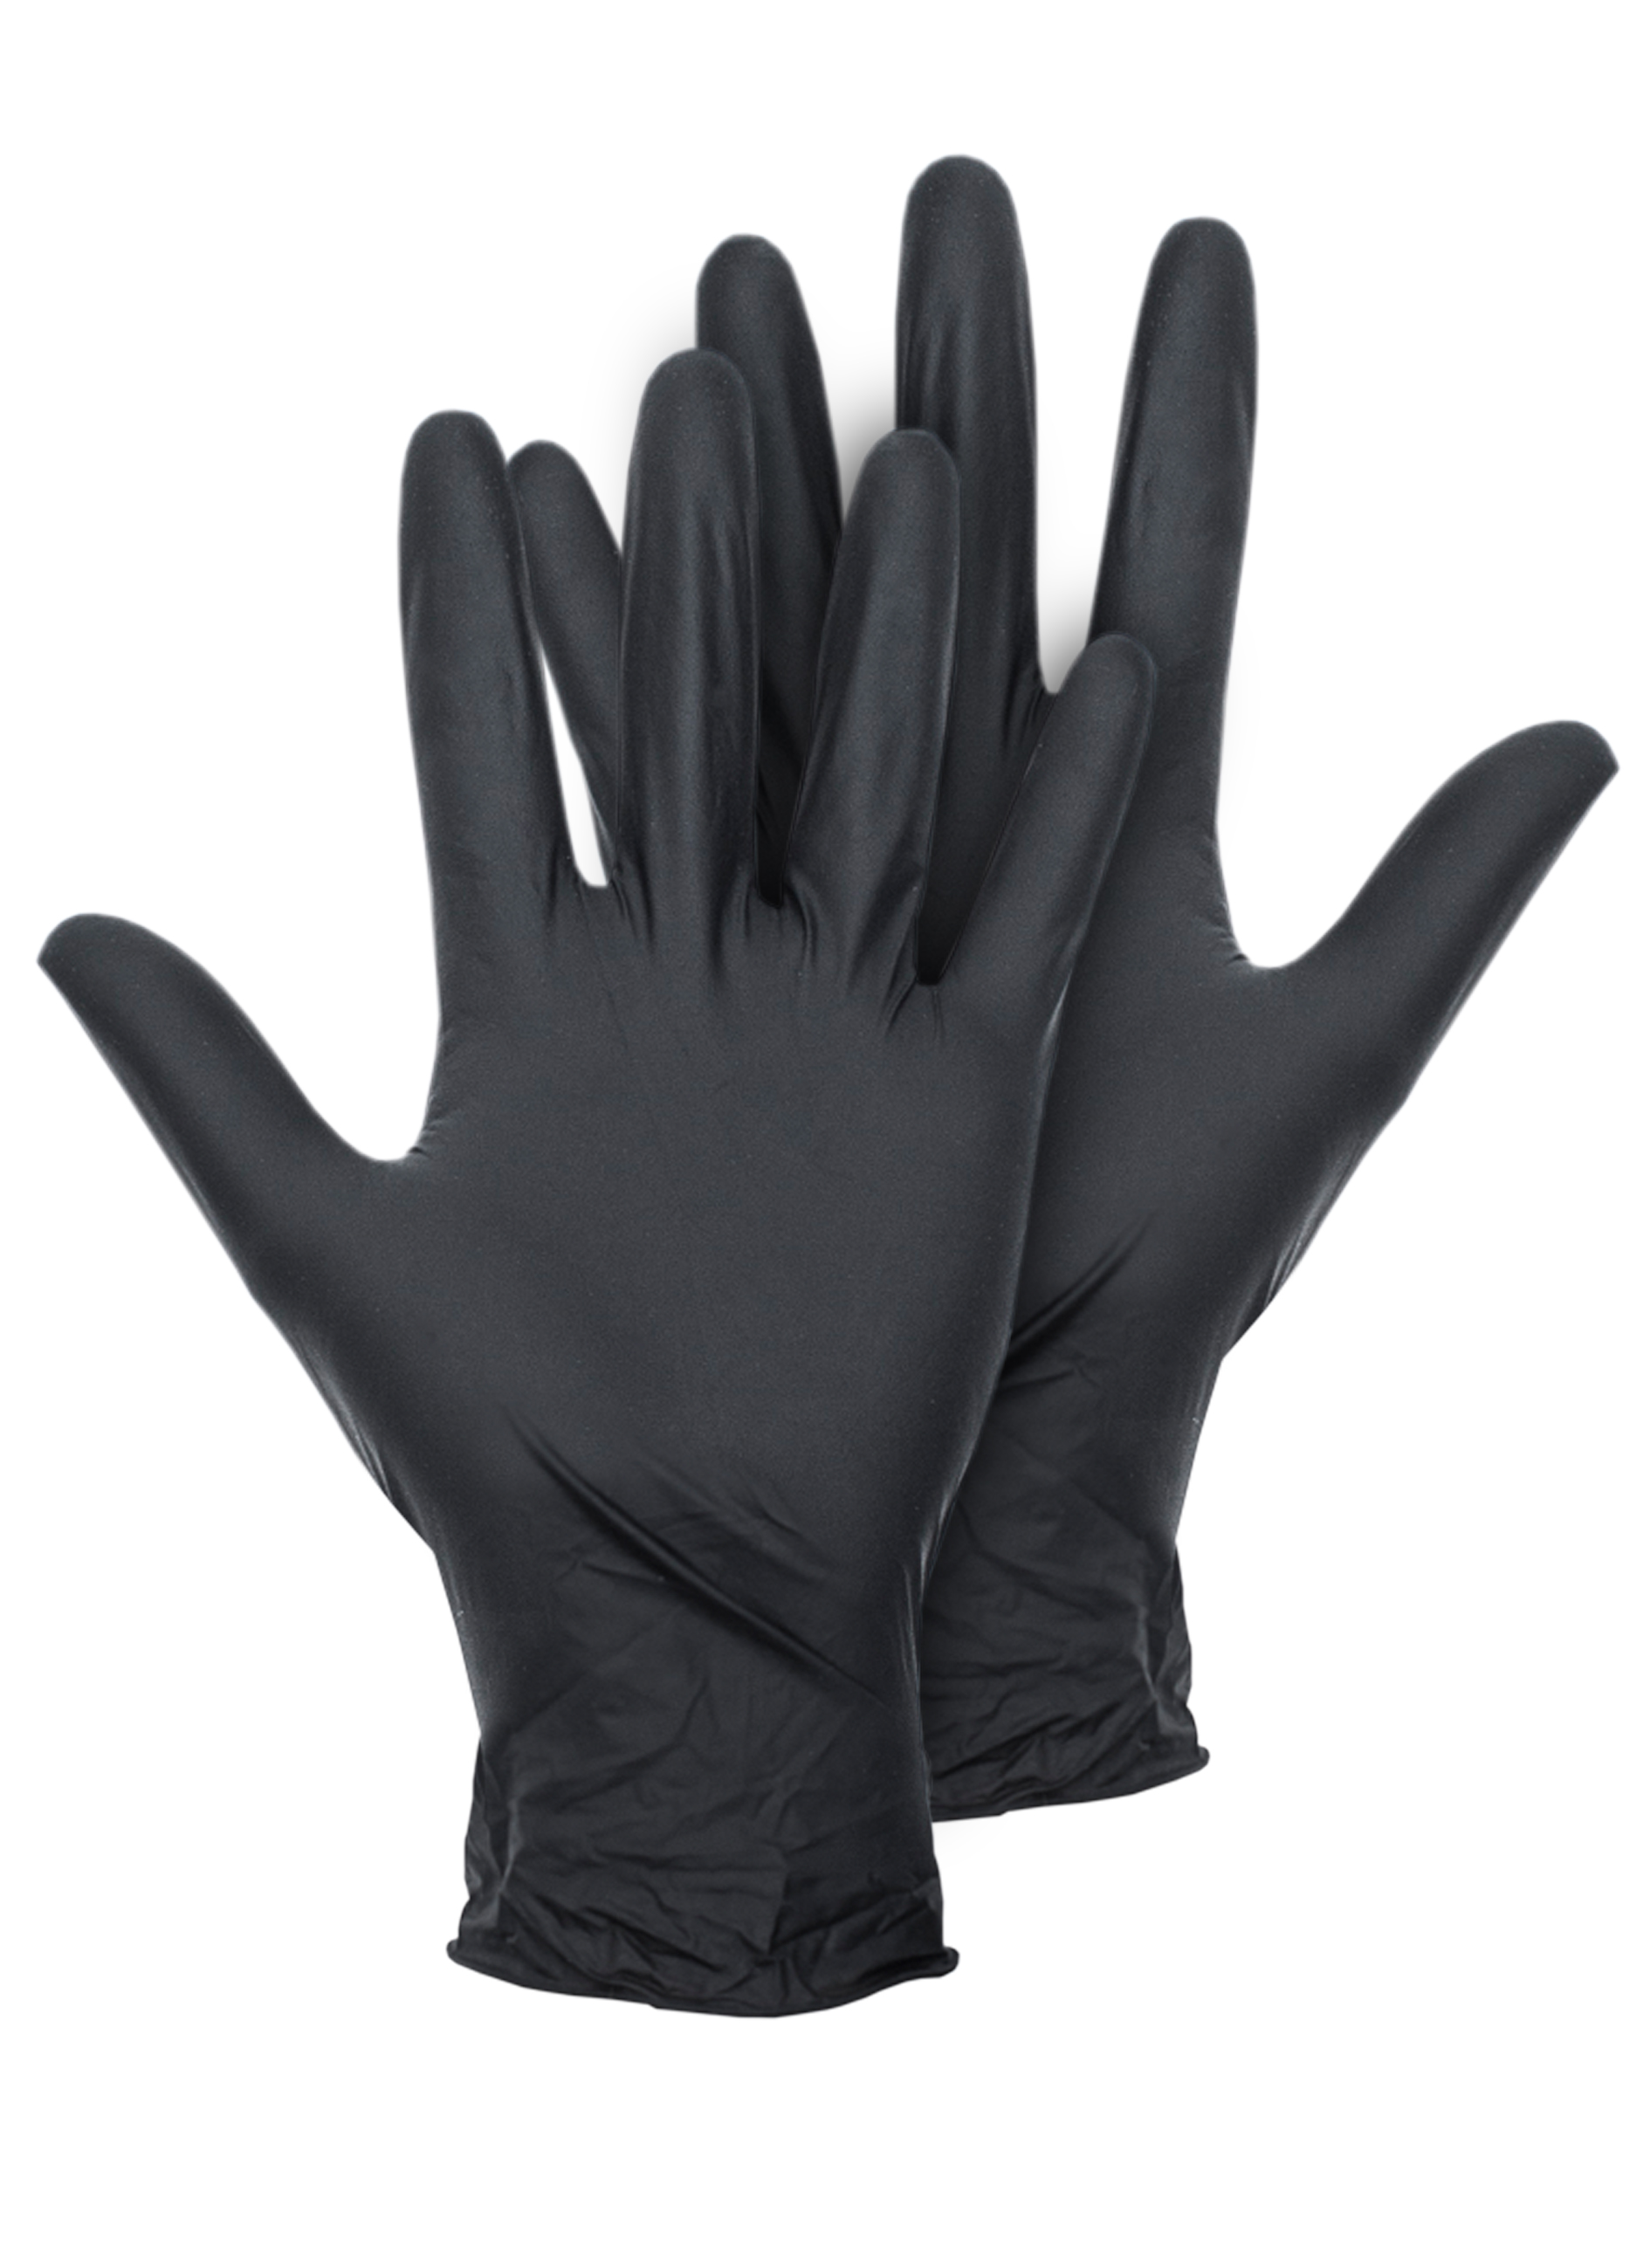 Montana Nitril Gloves